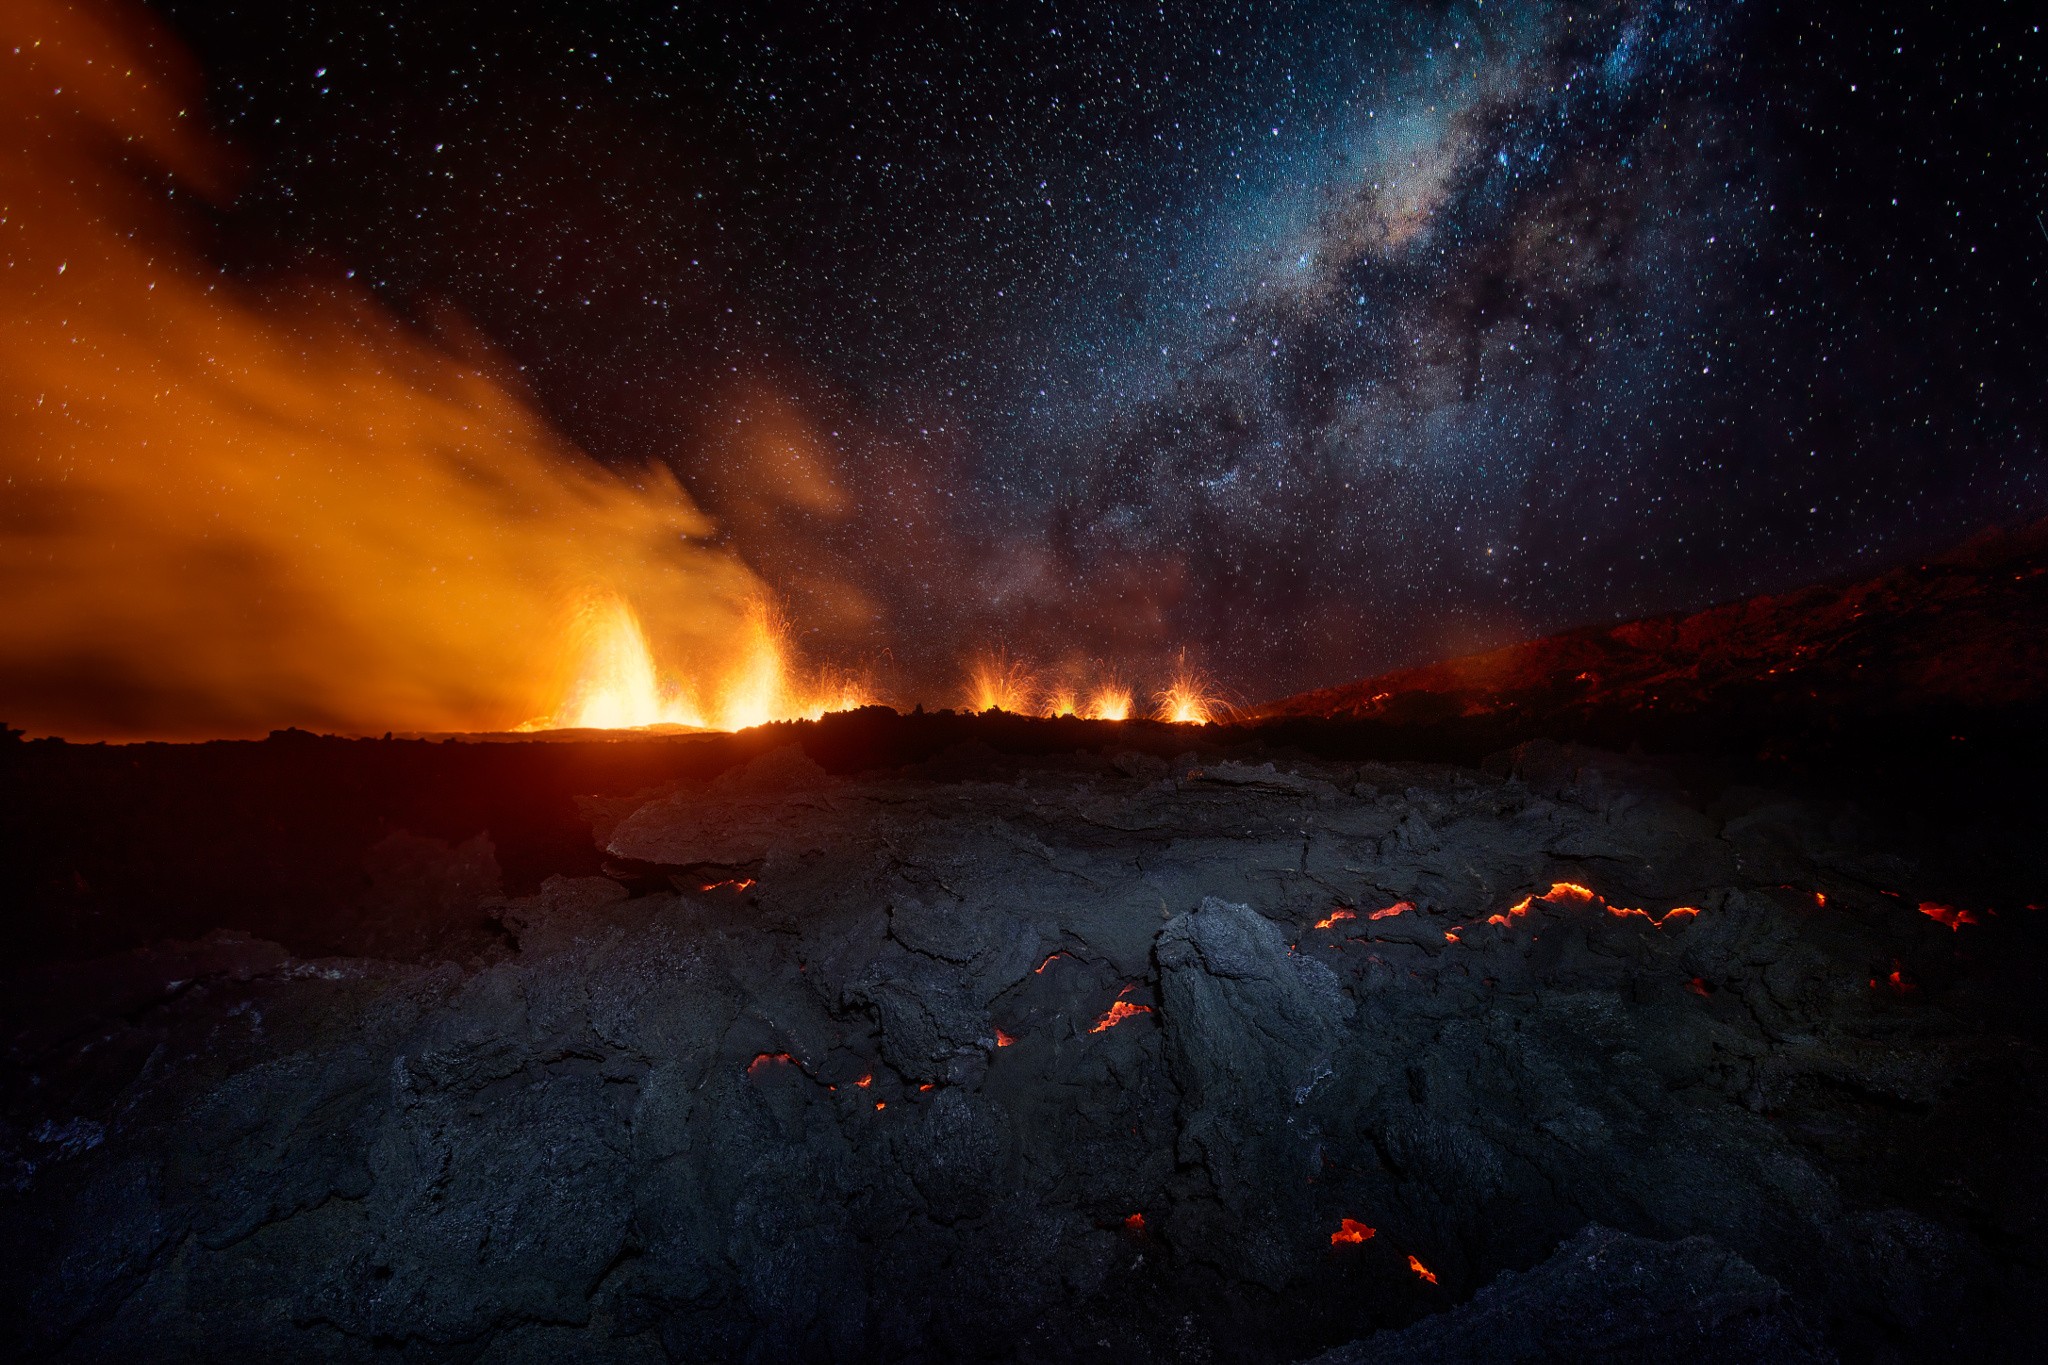 General 2048x1365 landscape volcano eruption sky lava island smoke night rocks fire stars